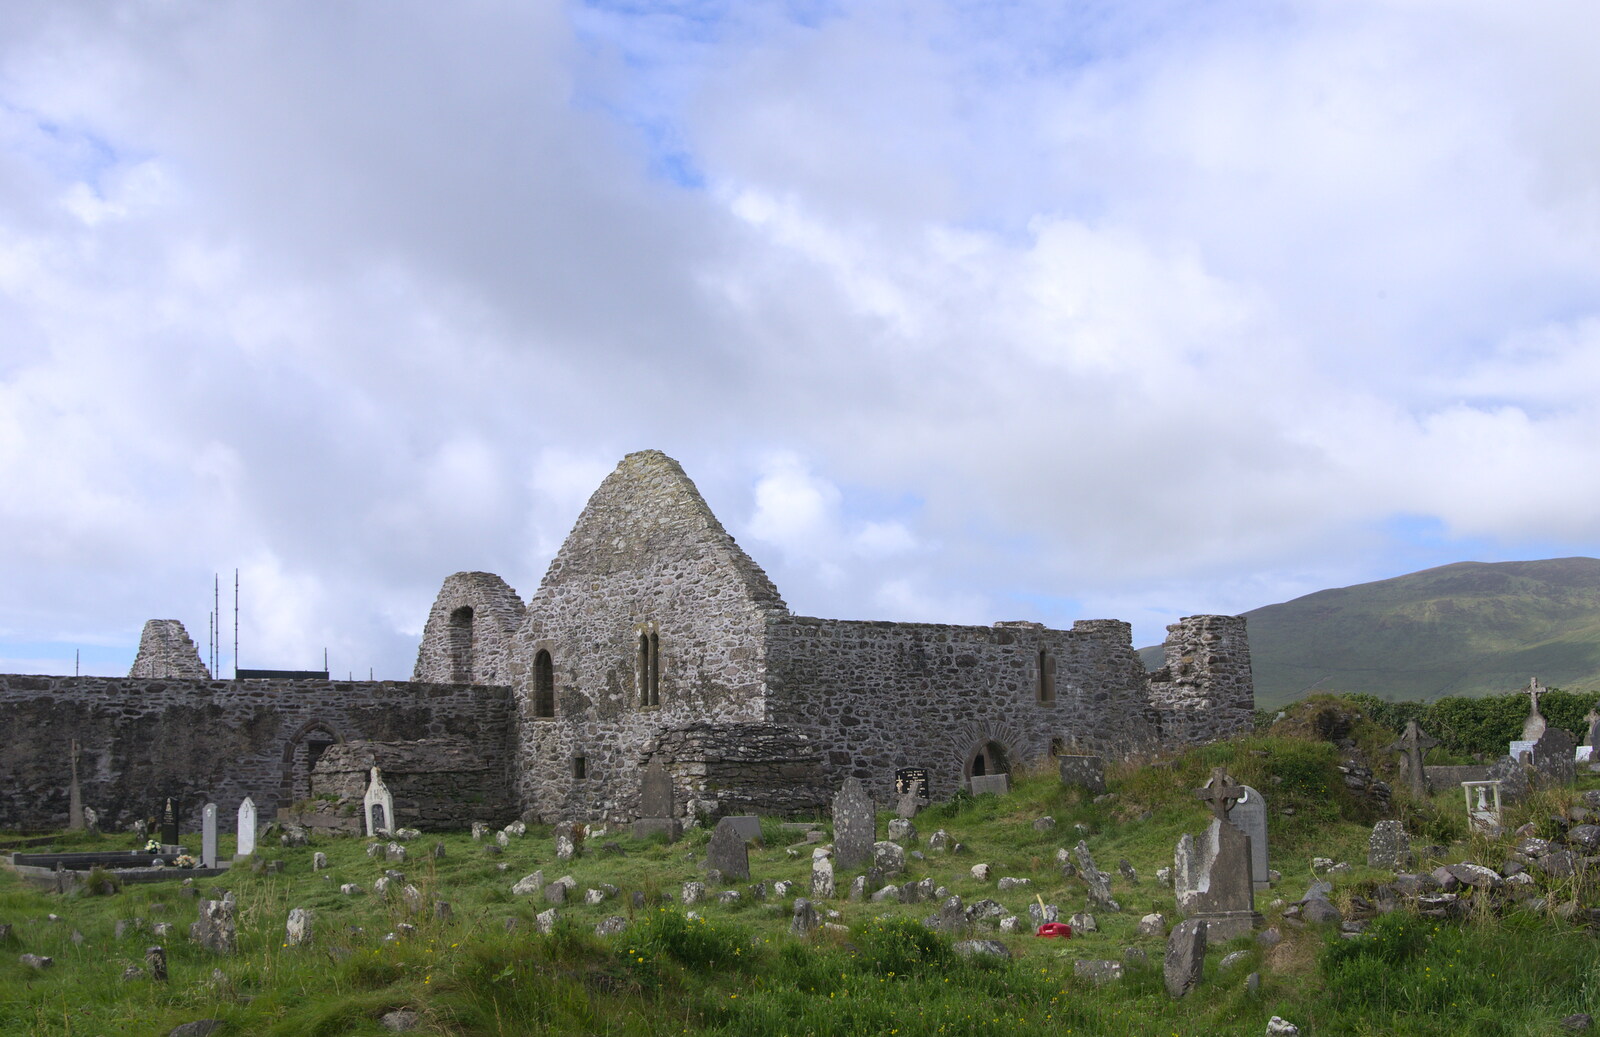 Ballinskelligs Abbey from Baile an Sceilg to An tSnaidhme, Co. Kerry, Ireland - 31st July 2017